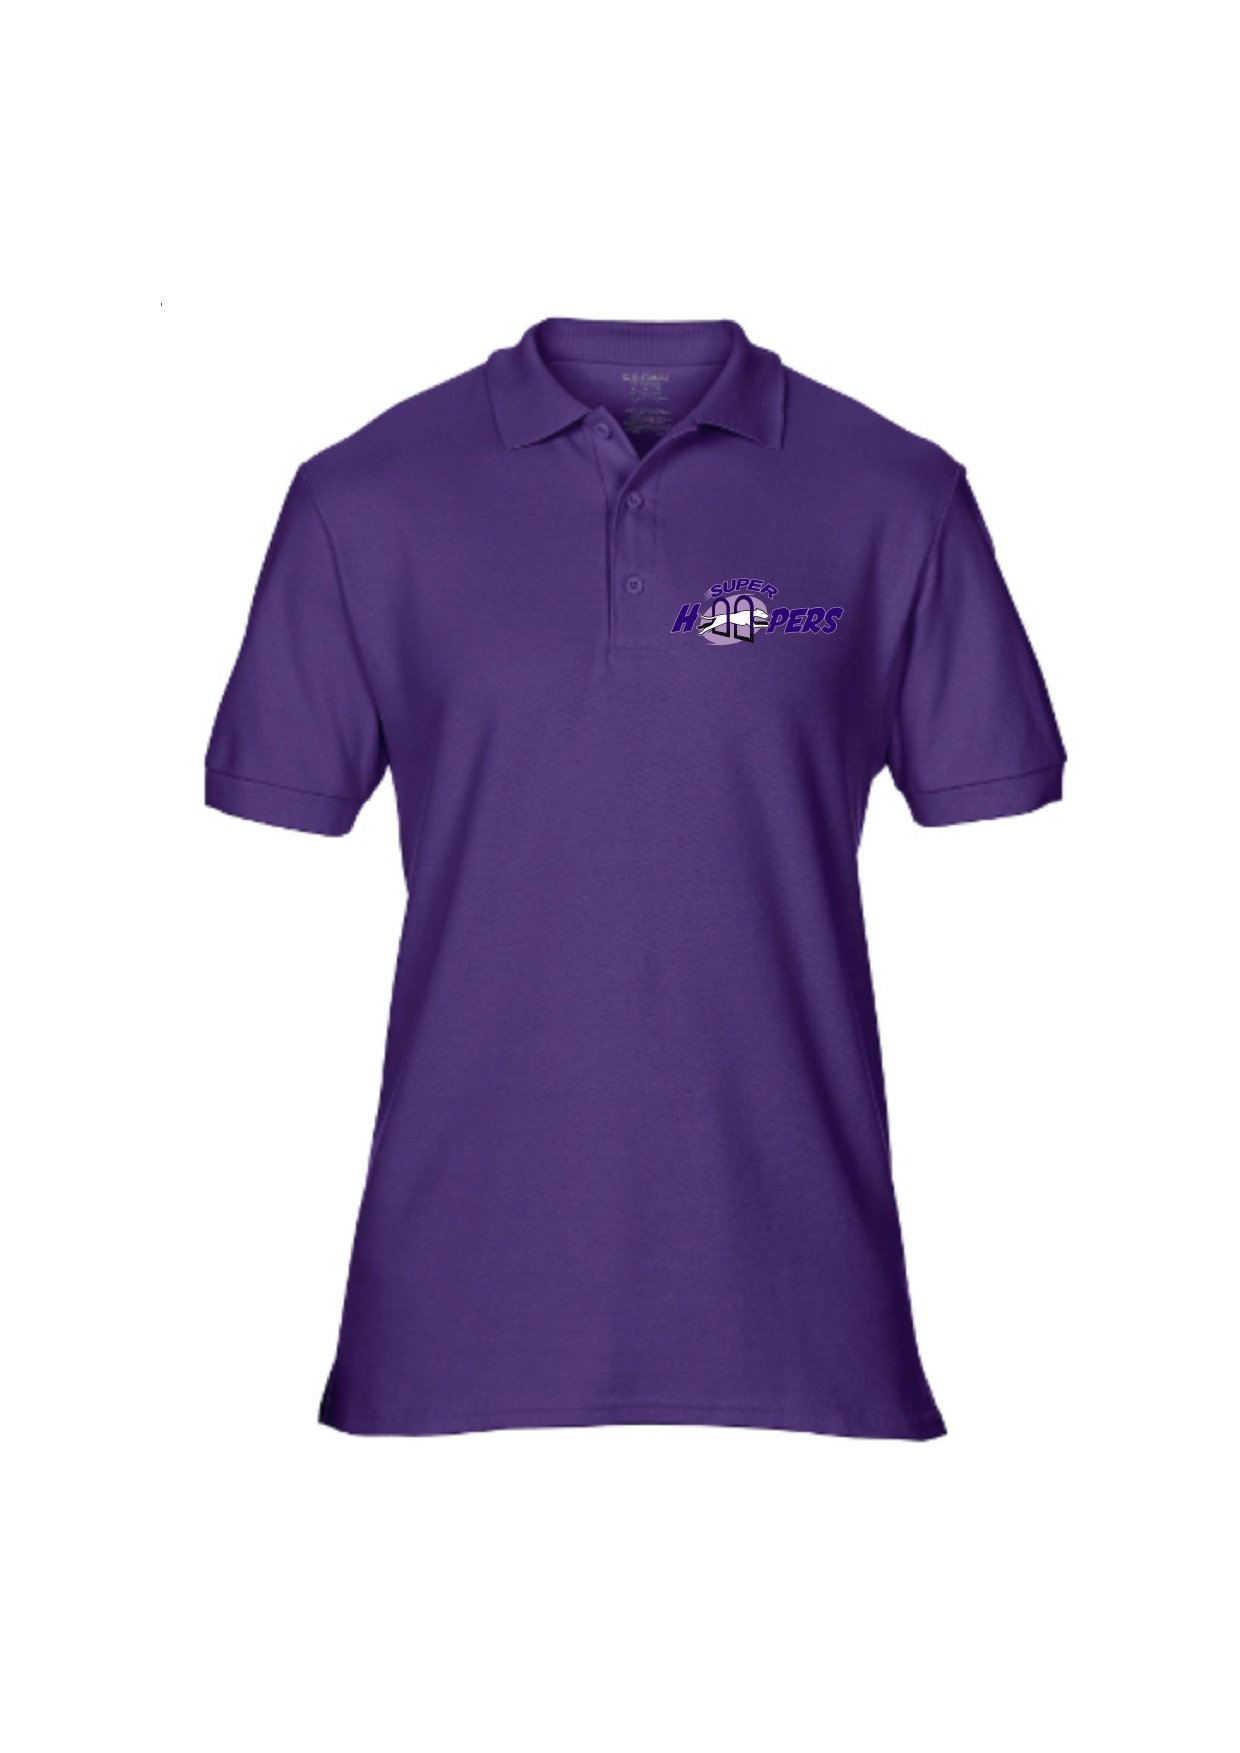 Super Hoopers Polo shirt Medium – Purple – Pooch